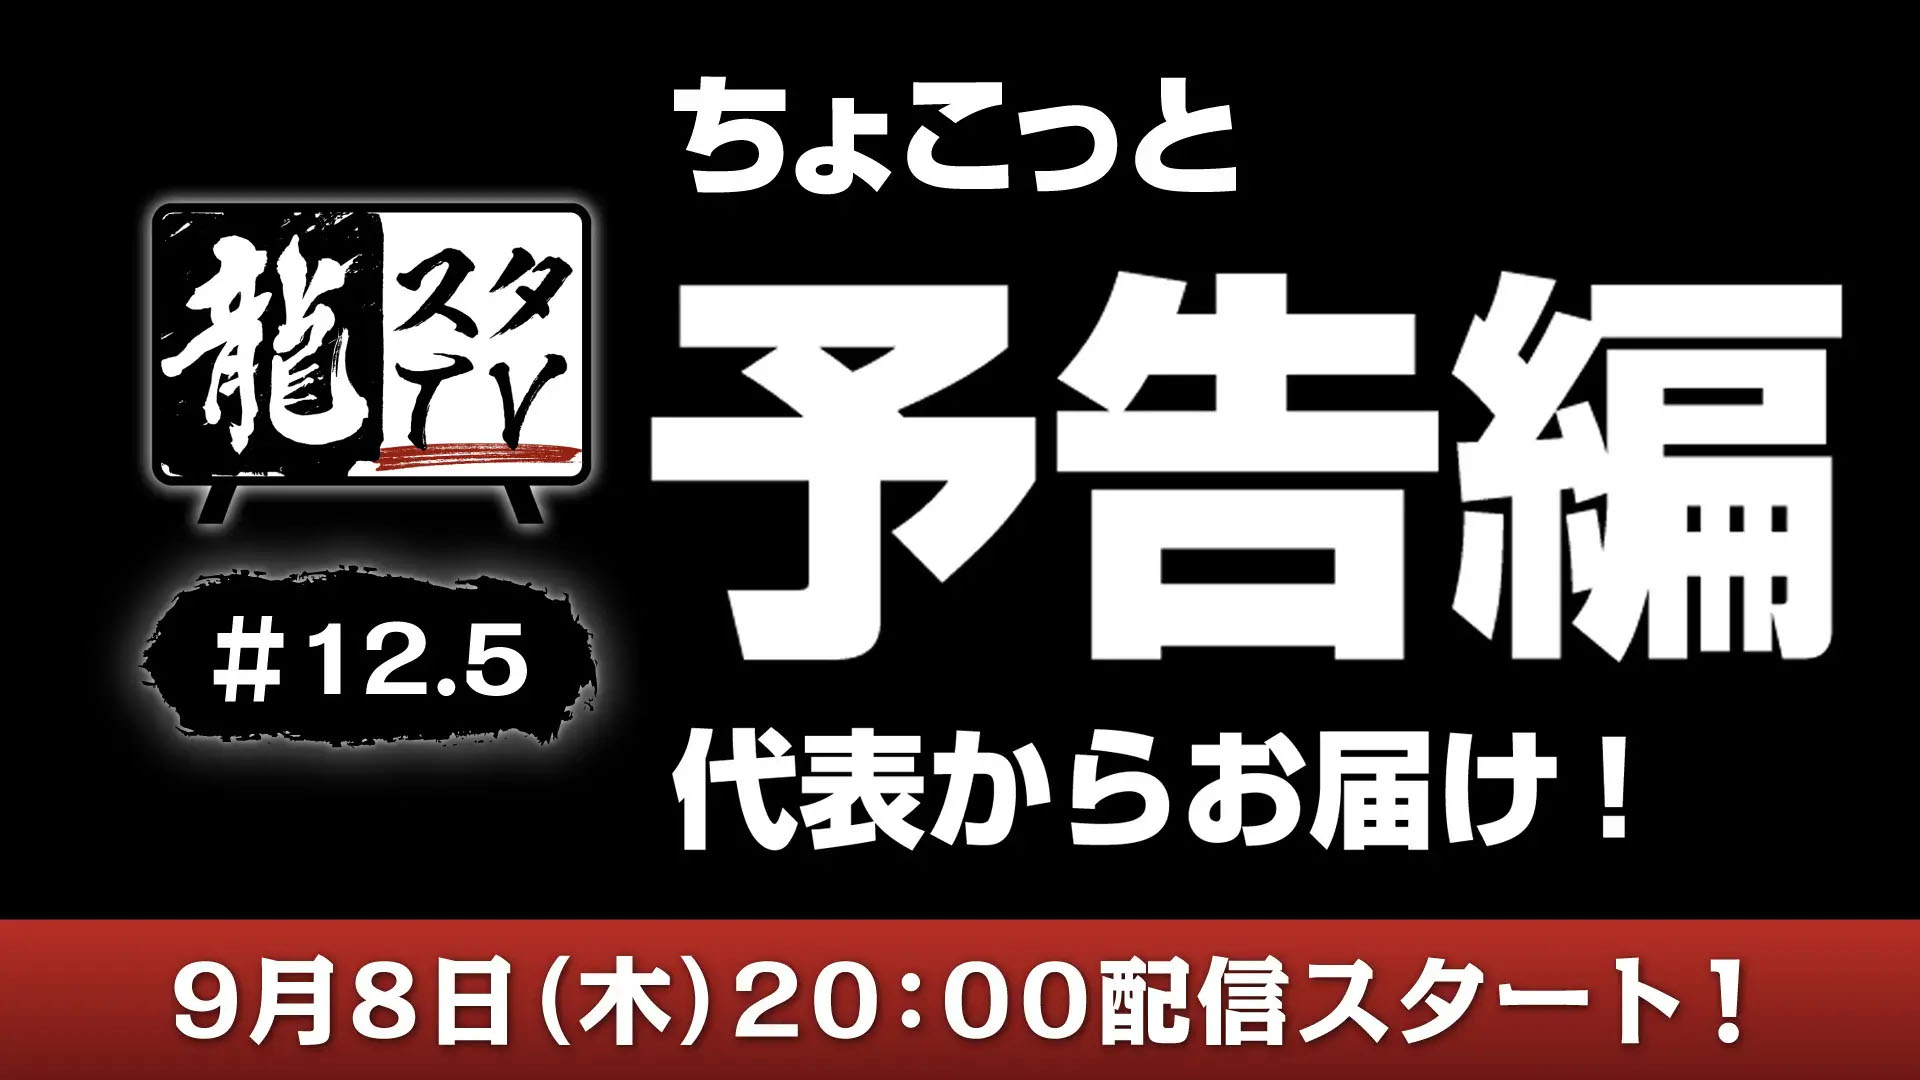 Ryu Ga Gotoku Studio confirms September 2022 livestream, will likely show  more Yakuza 8 - Niche Gamer